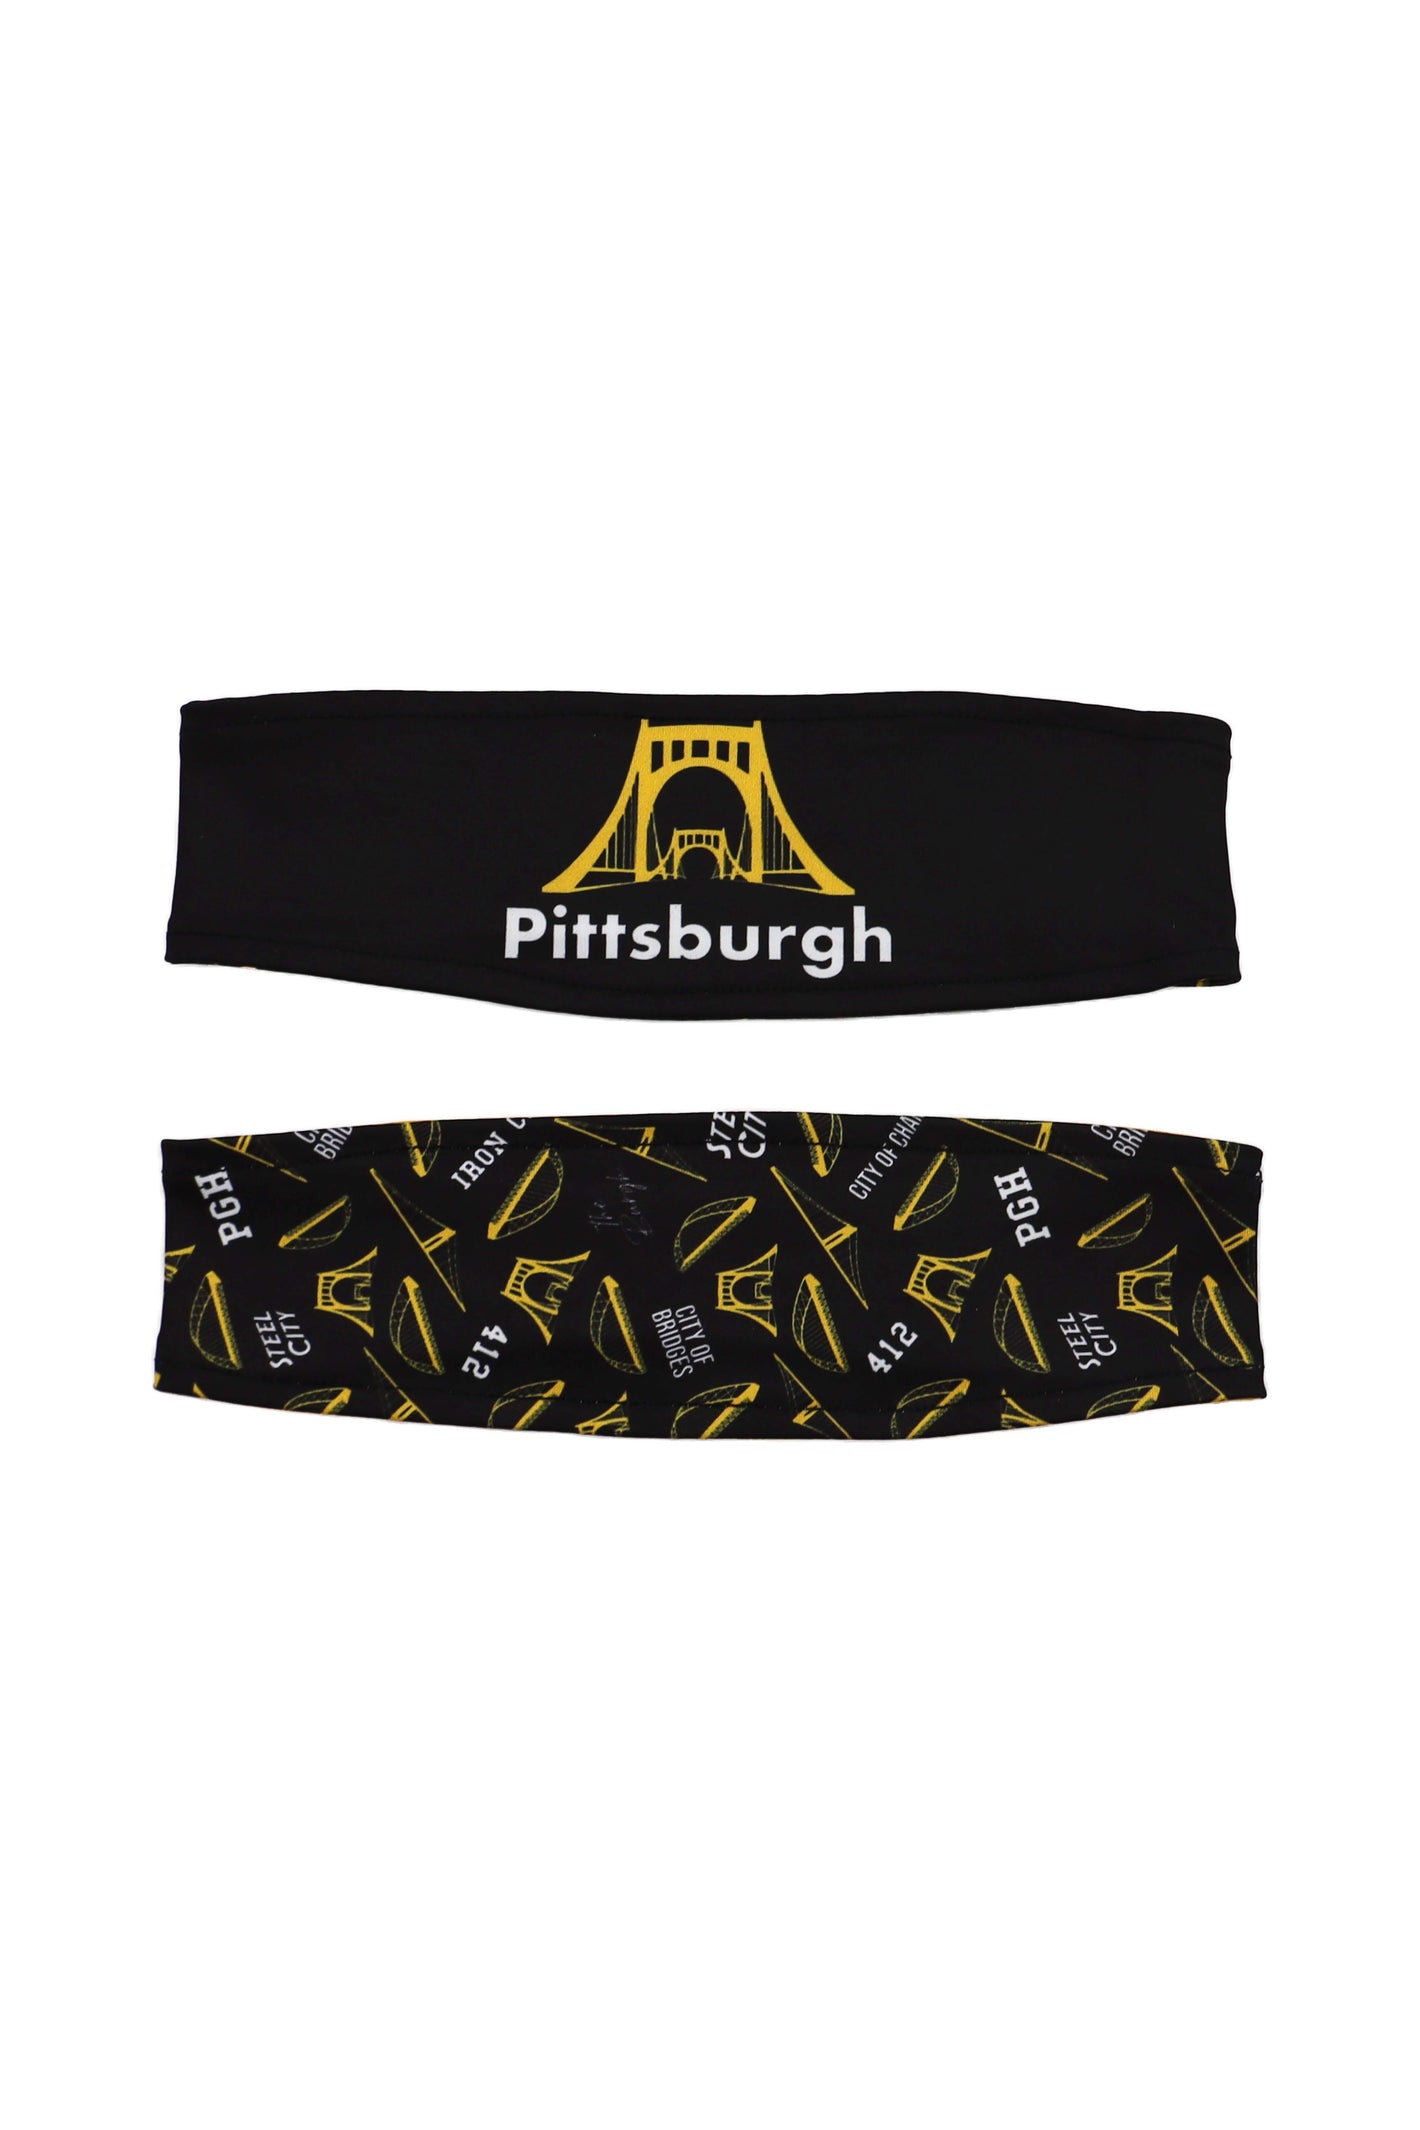 7109 - REVERSIBLE Pittsburgh Bridge Headband - Black & Gold Print